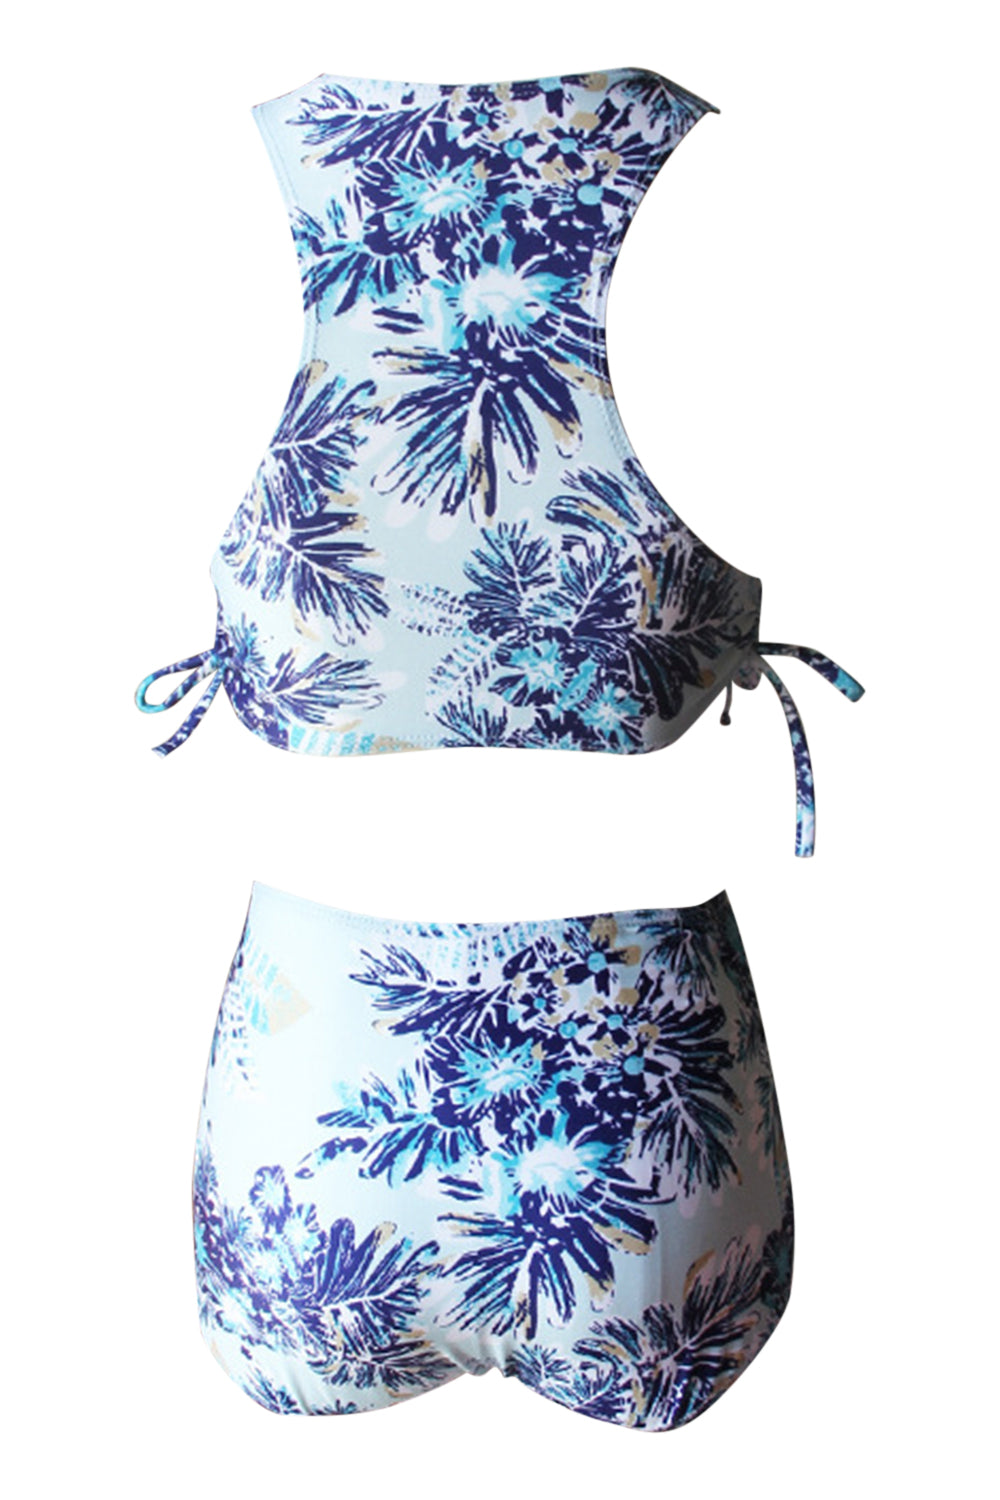 Iyasson Blue Floral Printing Tank Top Bikini Set